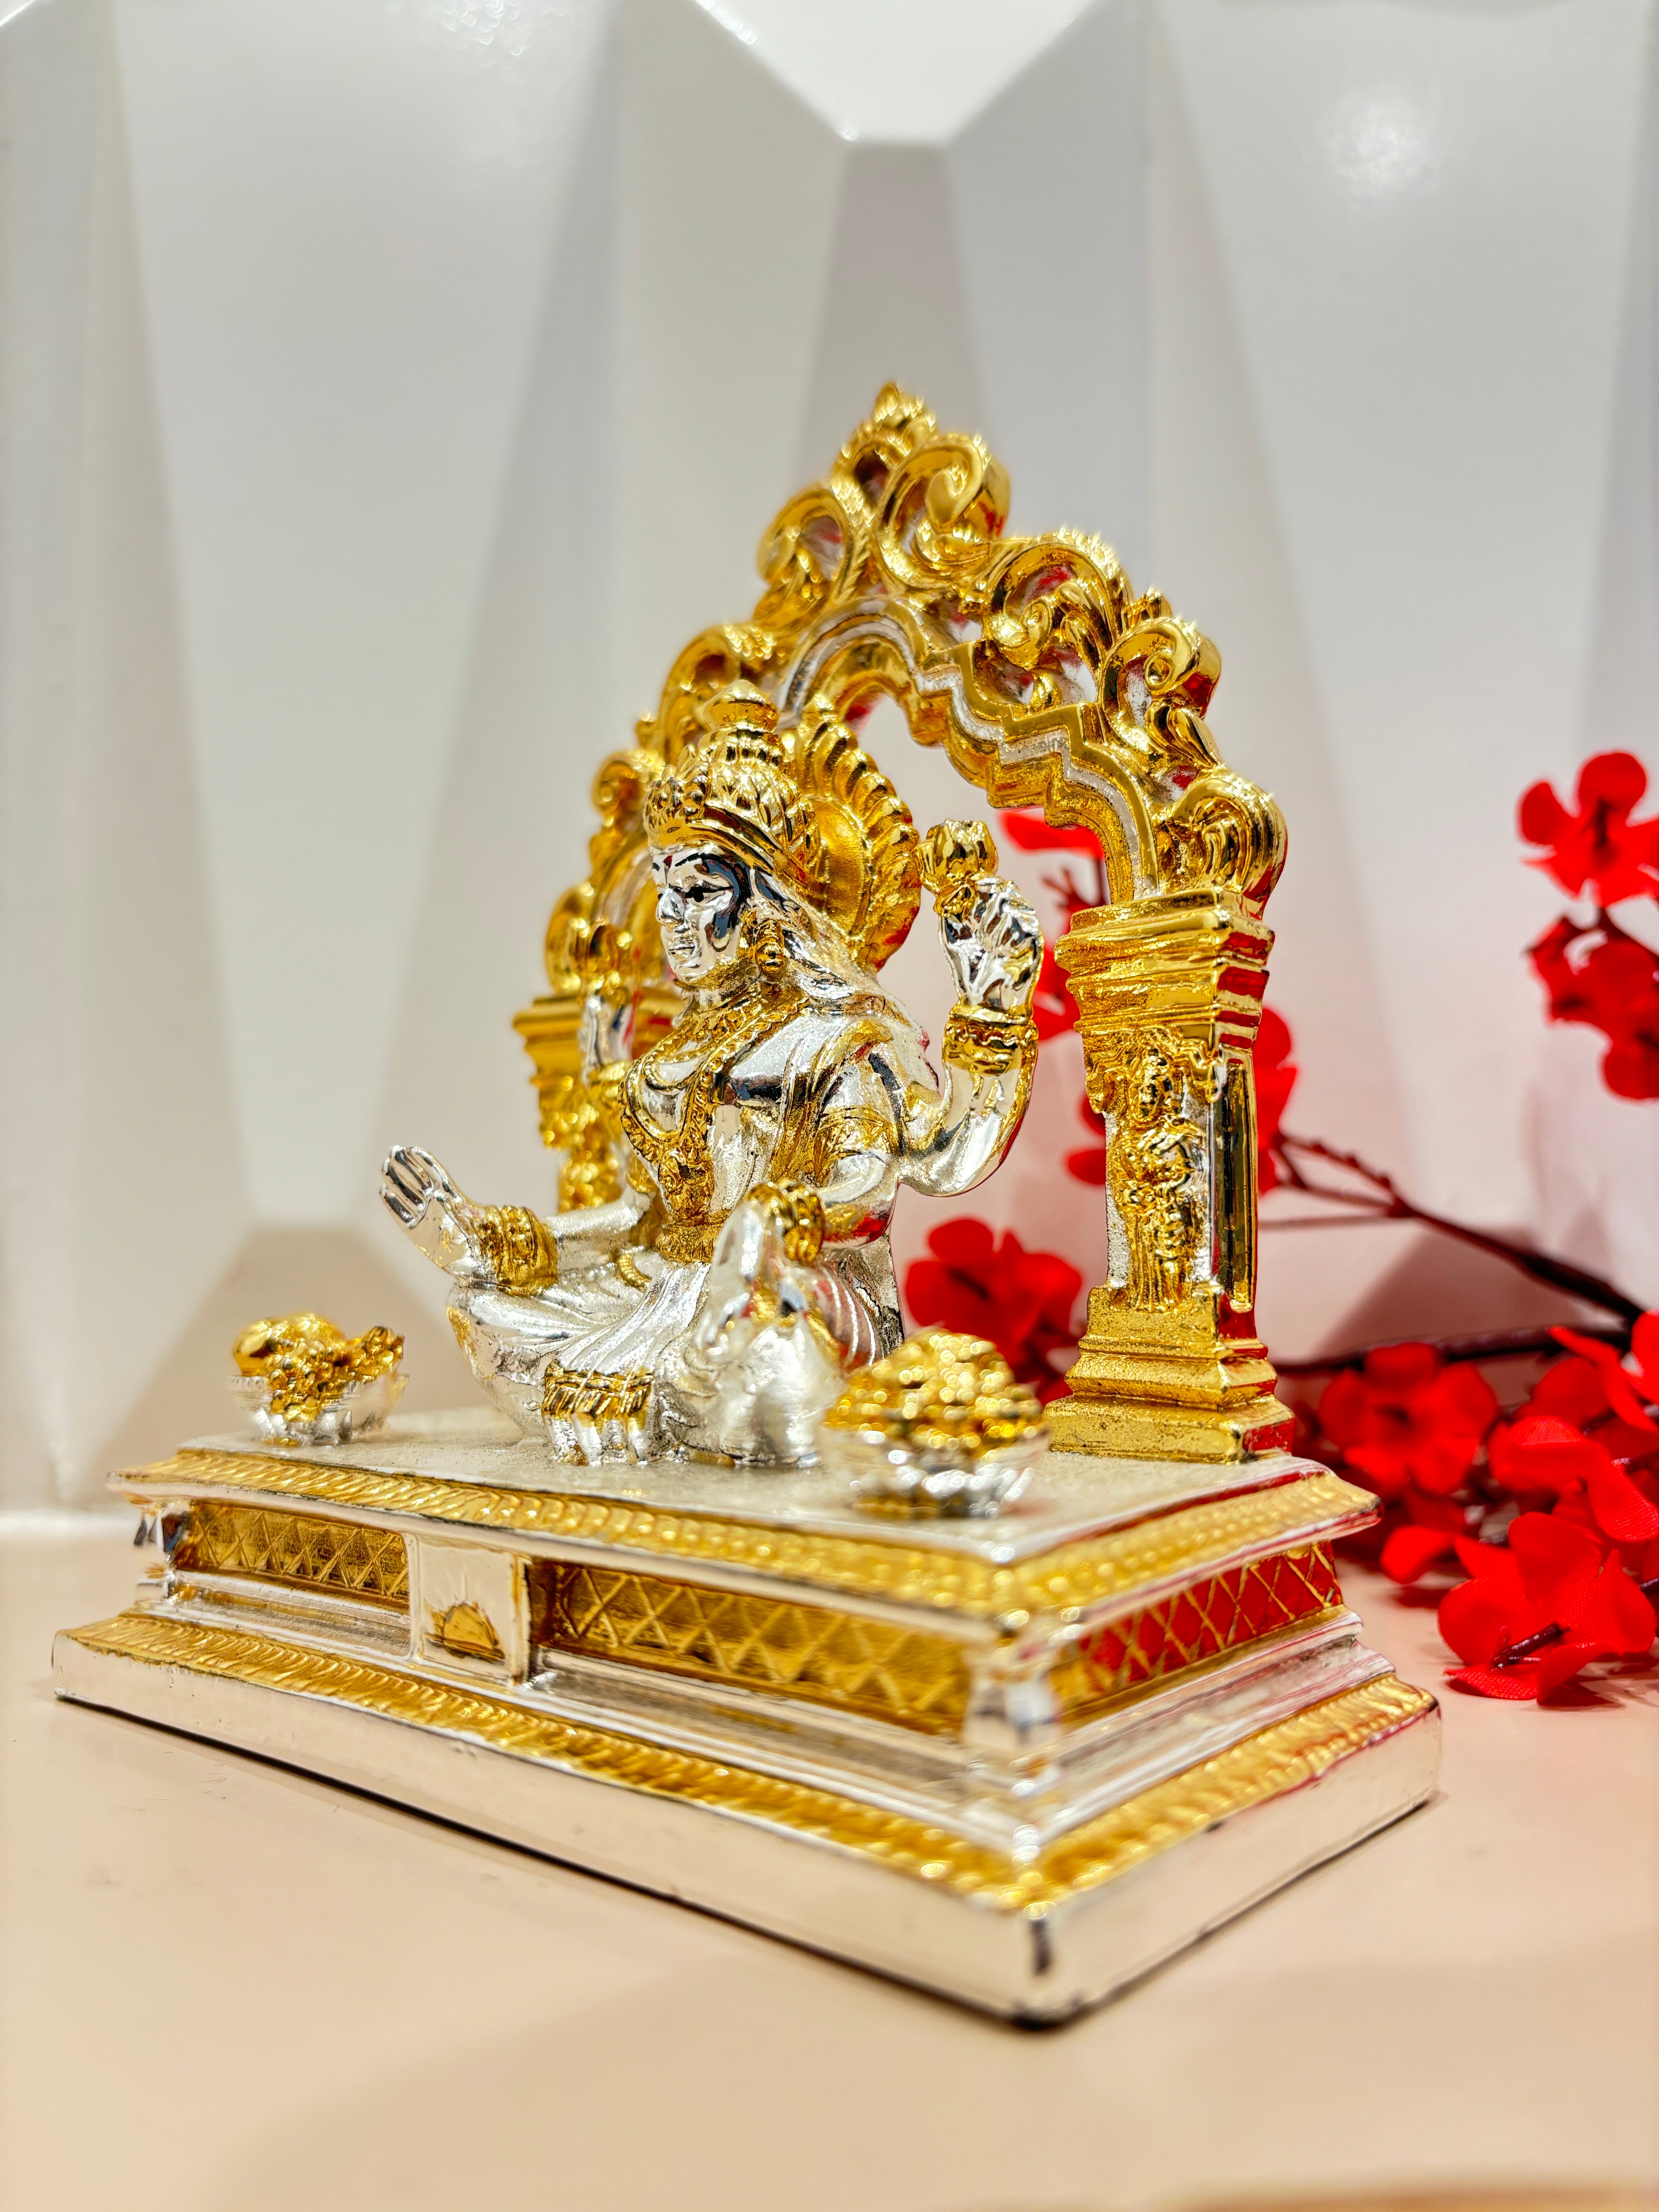 999 Original Gold and Silver Coated Lotus Laxmi Idol | Laxmi Idol Gold on Lotus | Goddess of Wealth | Diwali Dhanteras Housewarming Gift